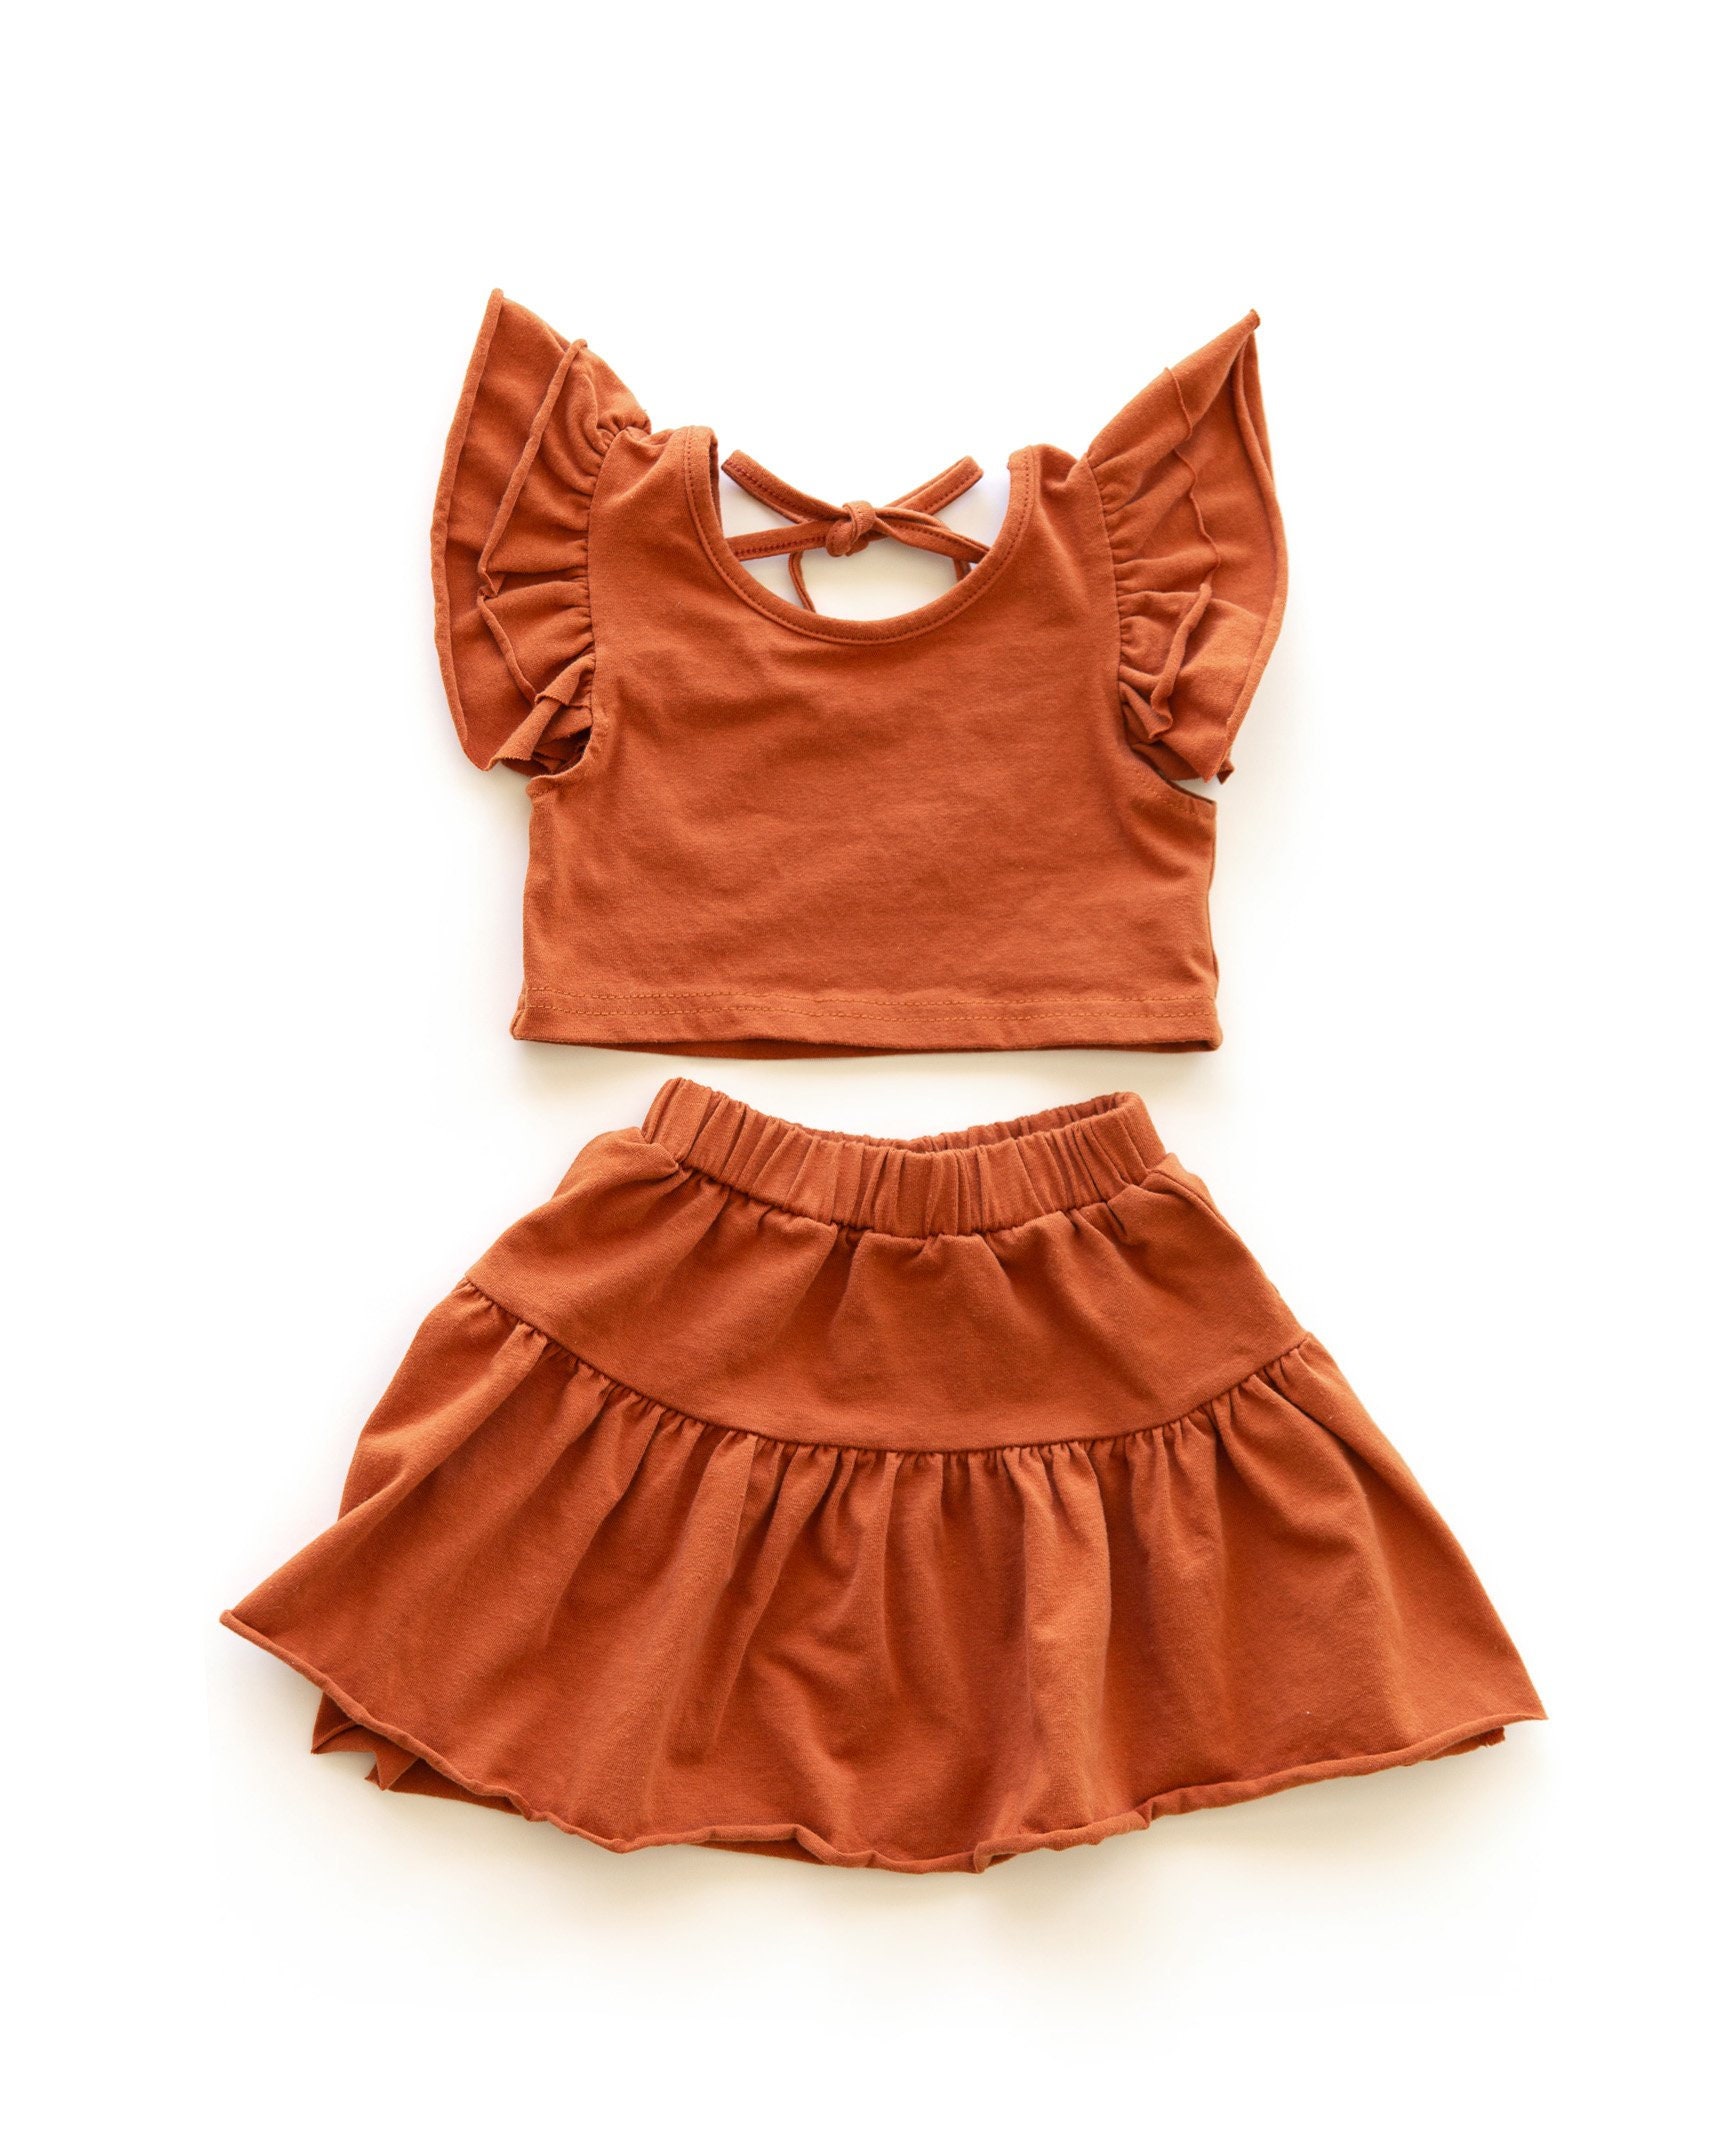 Little Girl Crop Top and Skirt in Rust Baby Girl Crop Top Set | Etsy